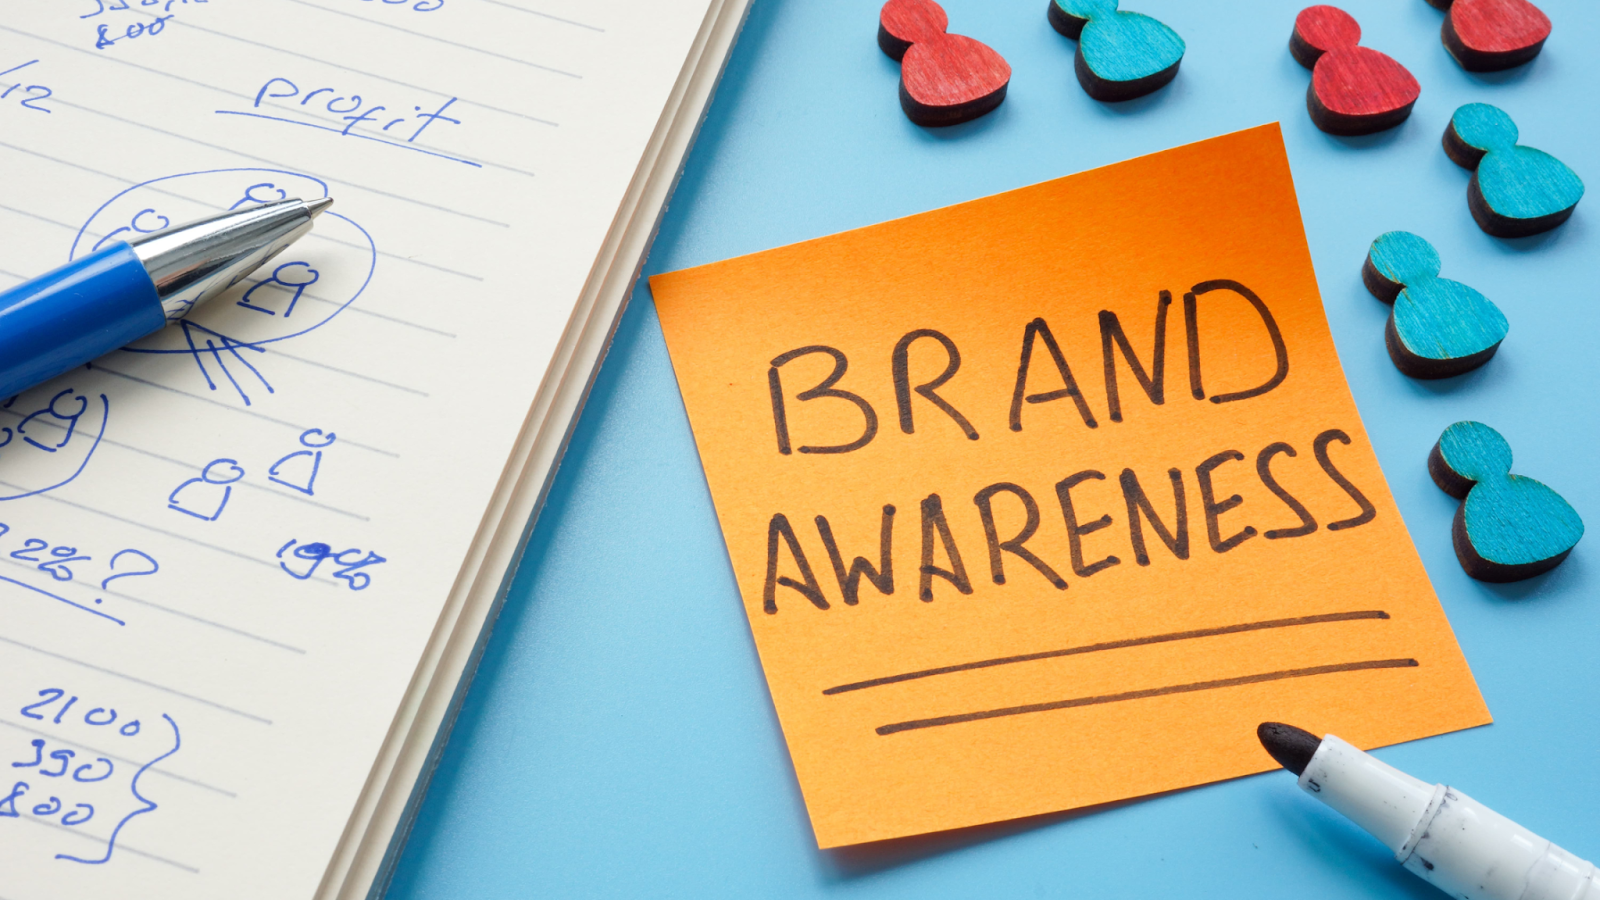 Brand Awareness through PPC campaigns